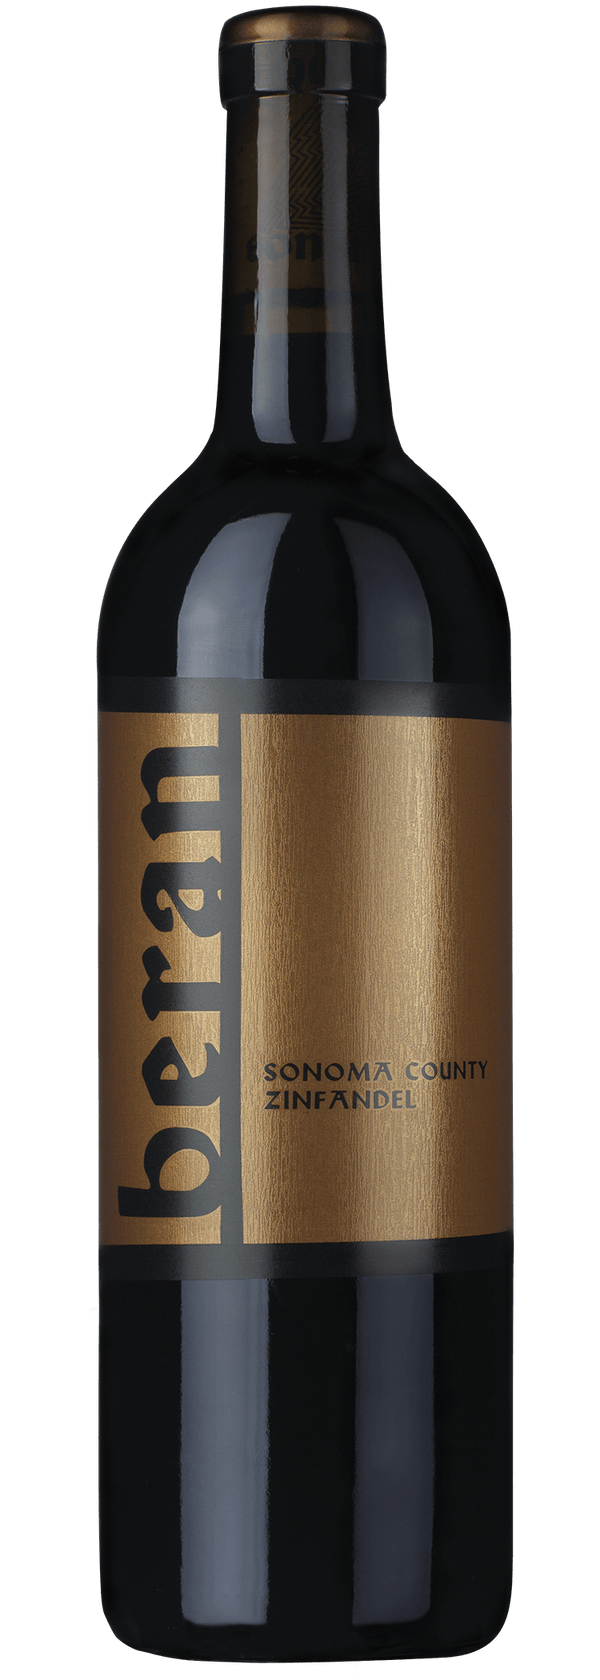 BERAN ZINFANDEL NAPA 750ML – Banks Wines & Spirits